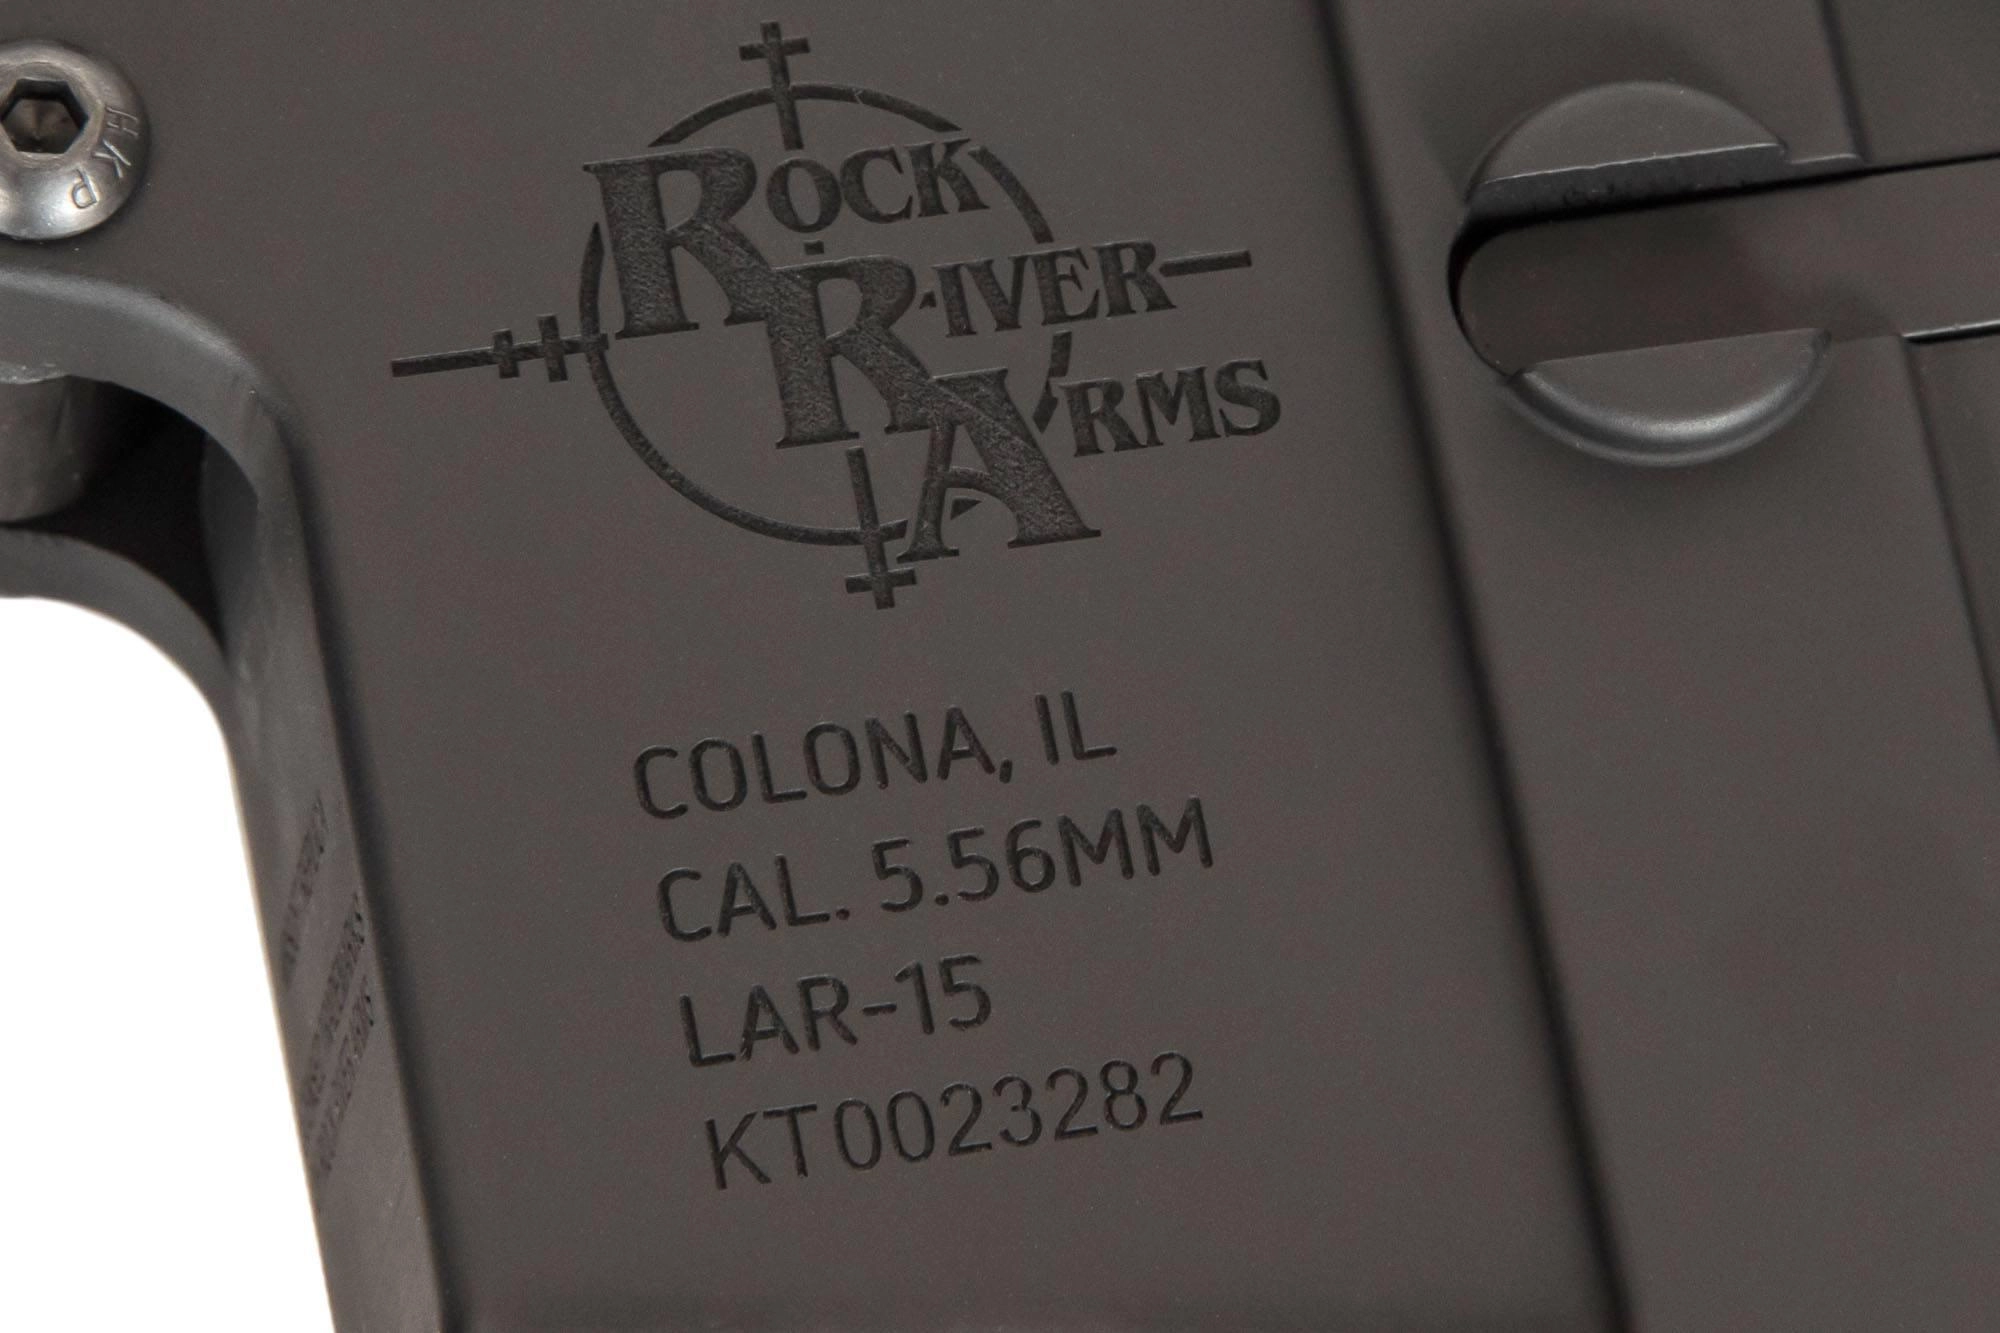 Specna Arms RRA SA-E07 EDGE 2.0 sähköase - musta/hiekka